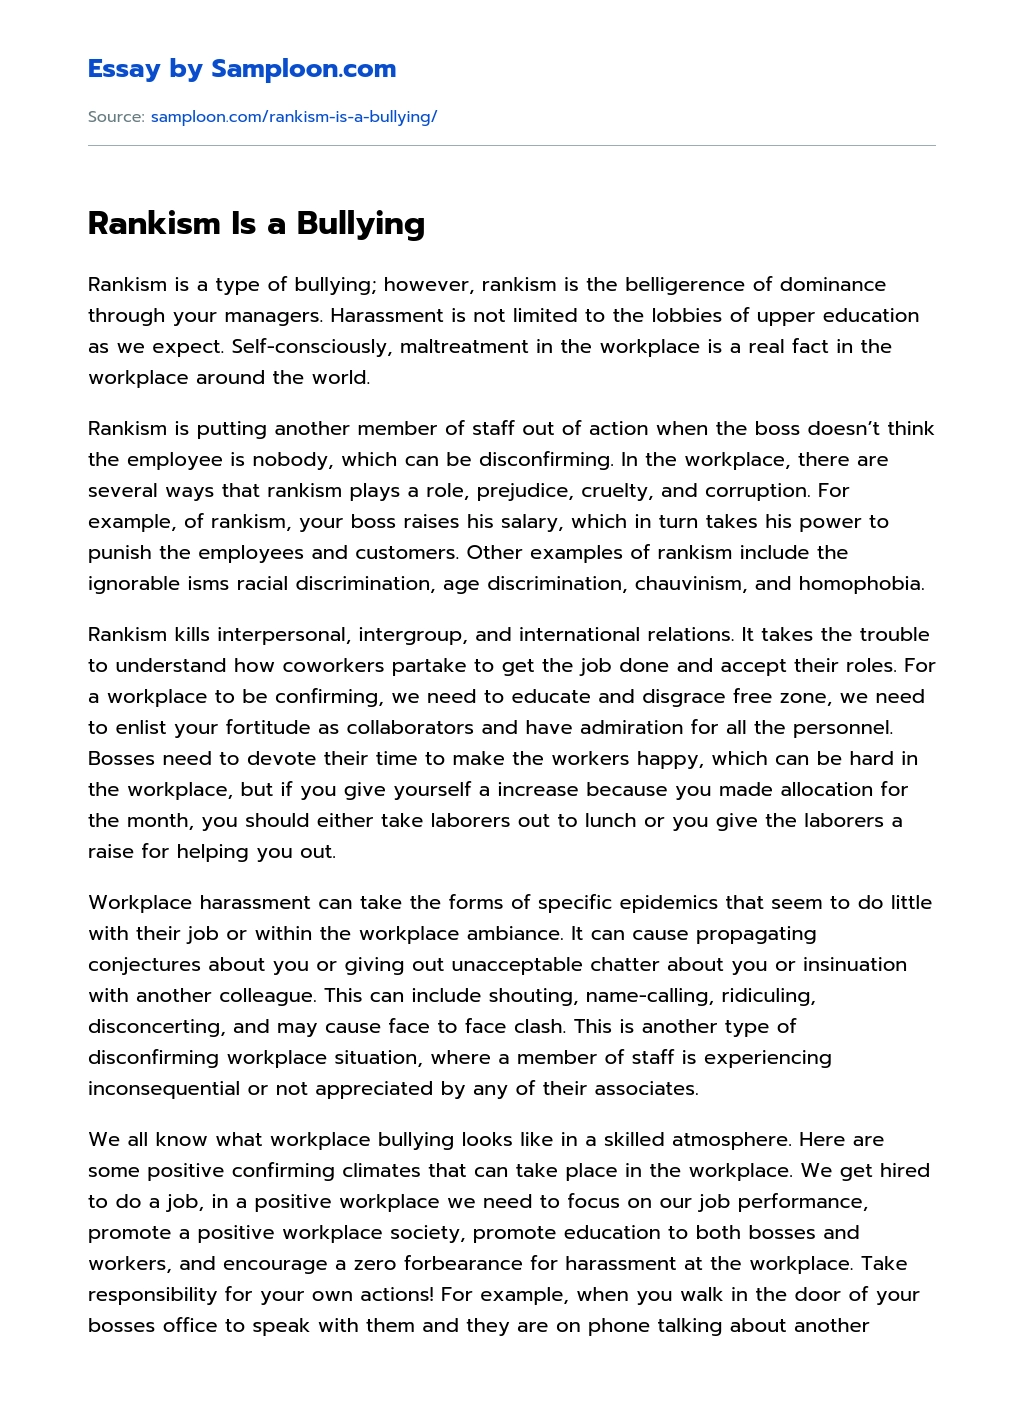 Rankism Is a Bullying essay